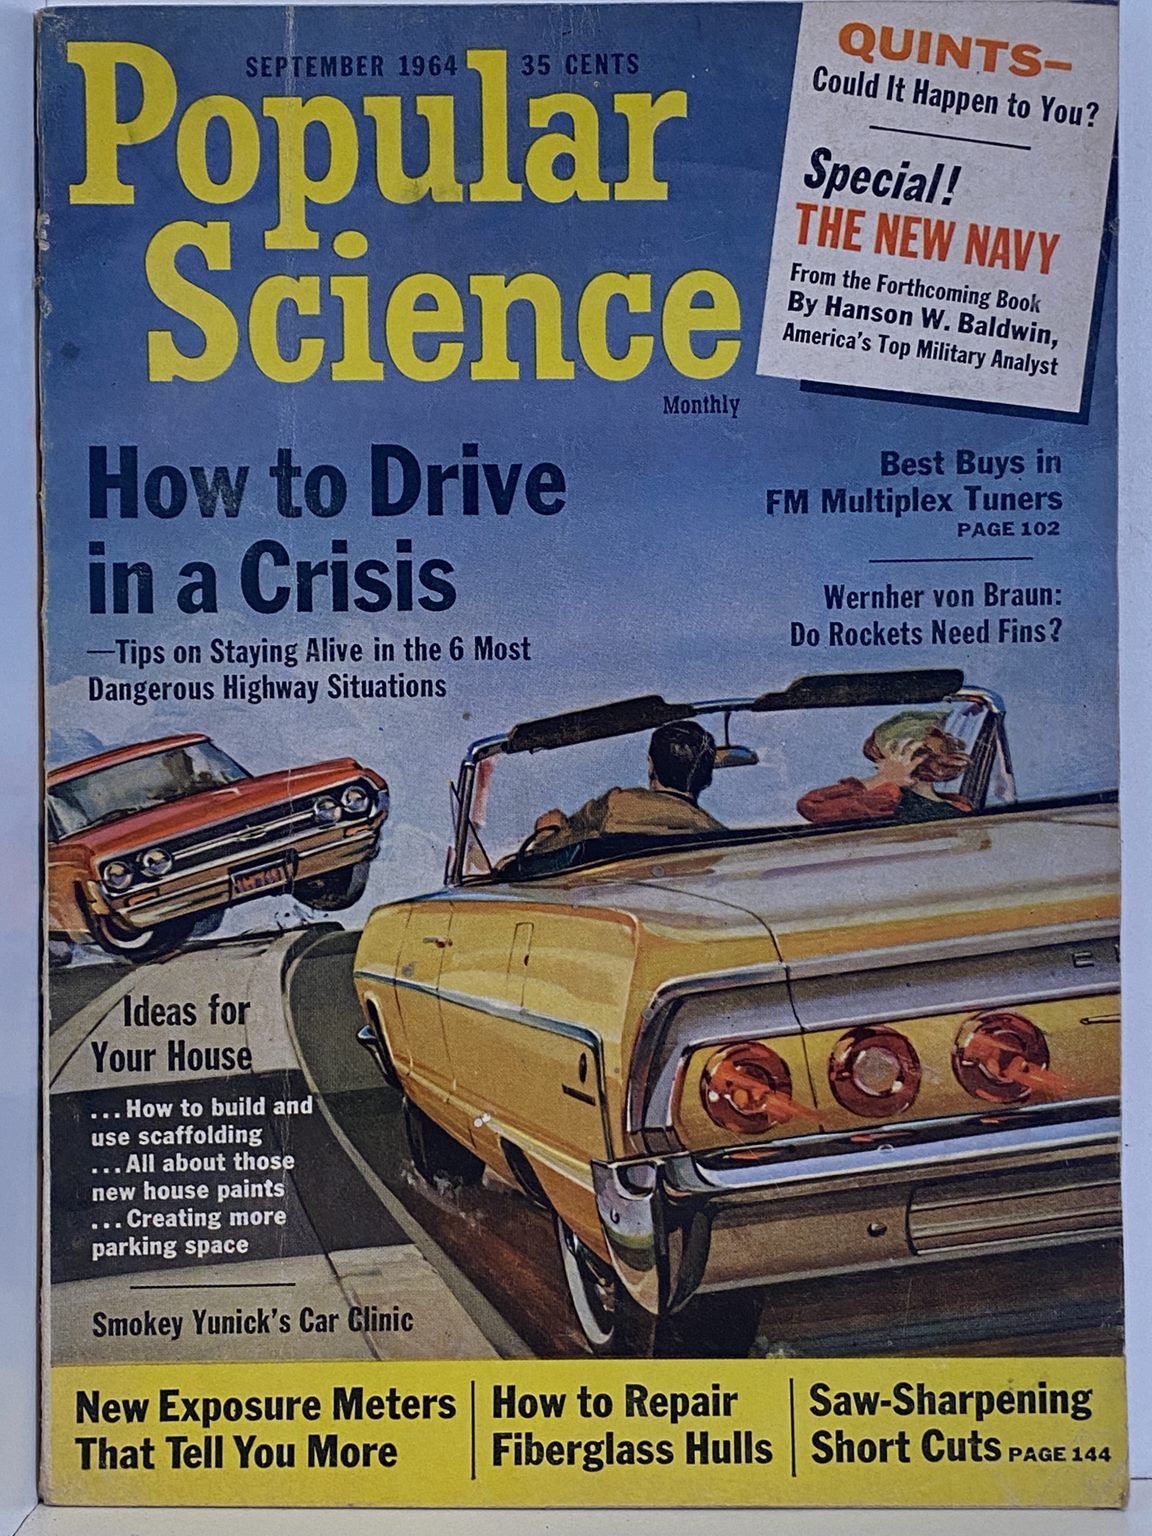 VINTAGE MAGAZINE: Popular Science, Vol. 185, No. 3 - September 1964